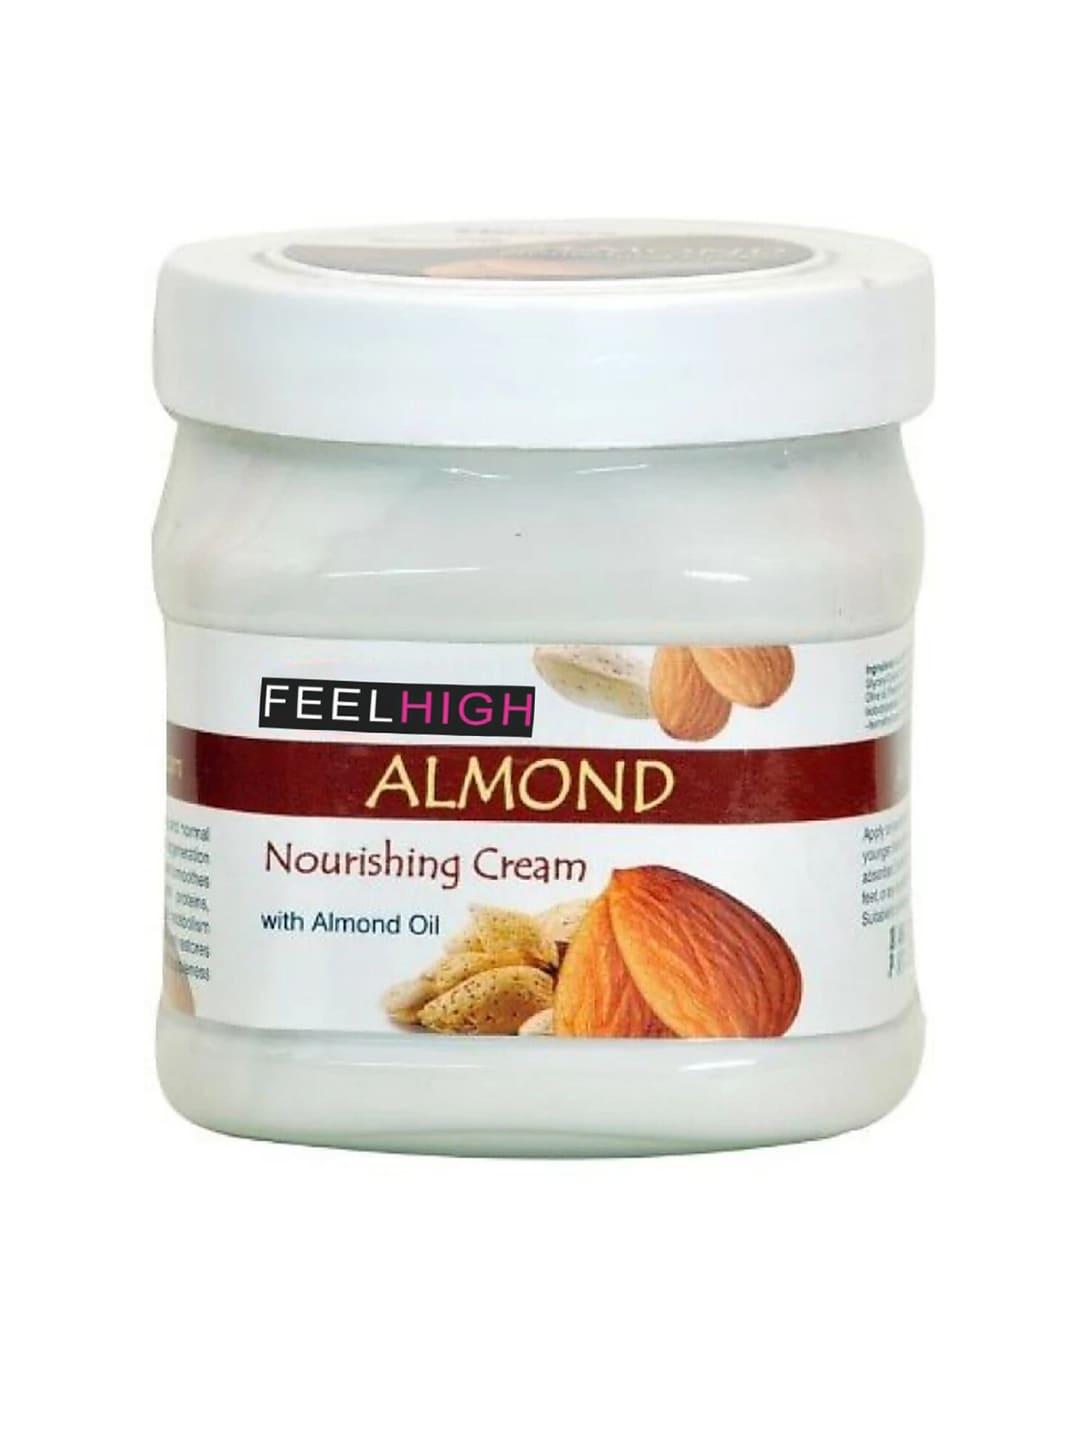 FEELHIGH Almond Nourishing Face & Body Cream - 500ml